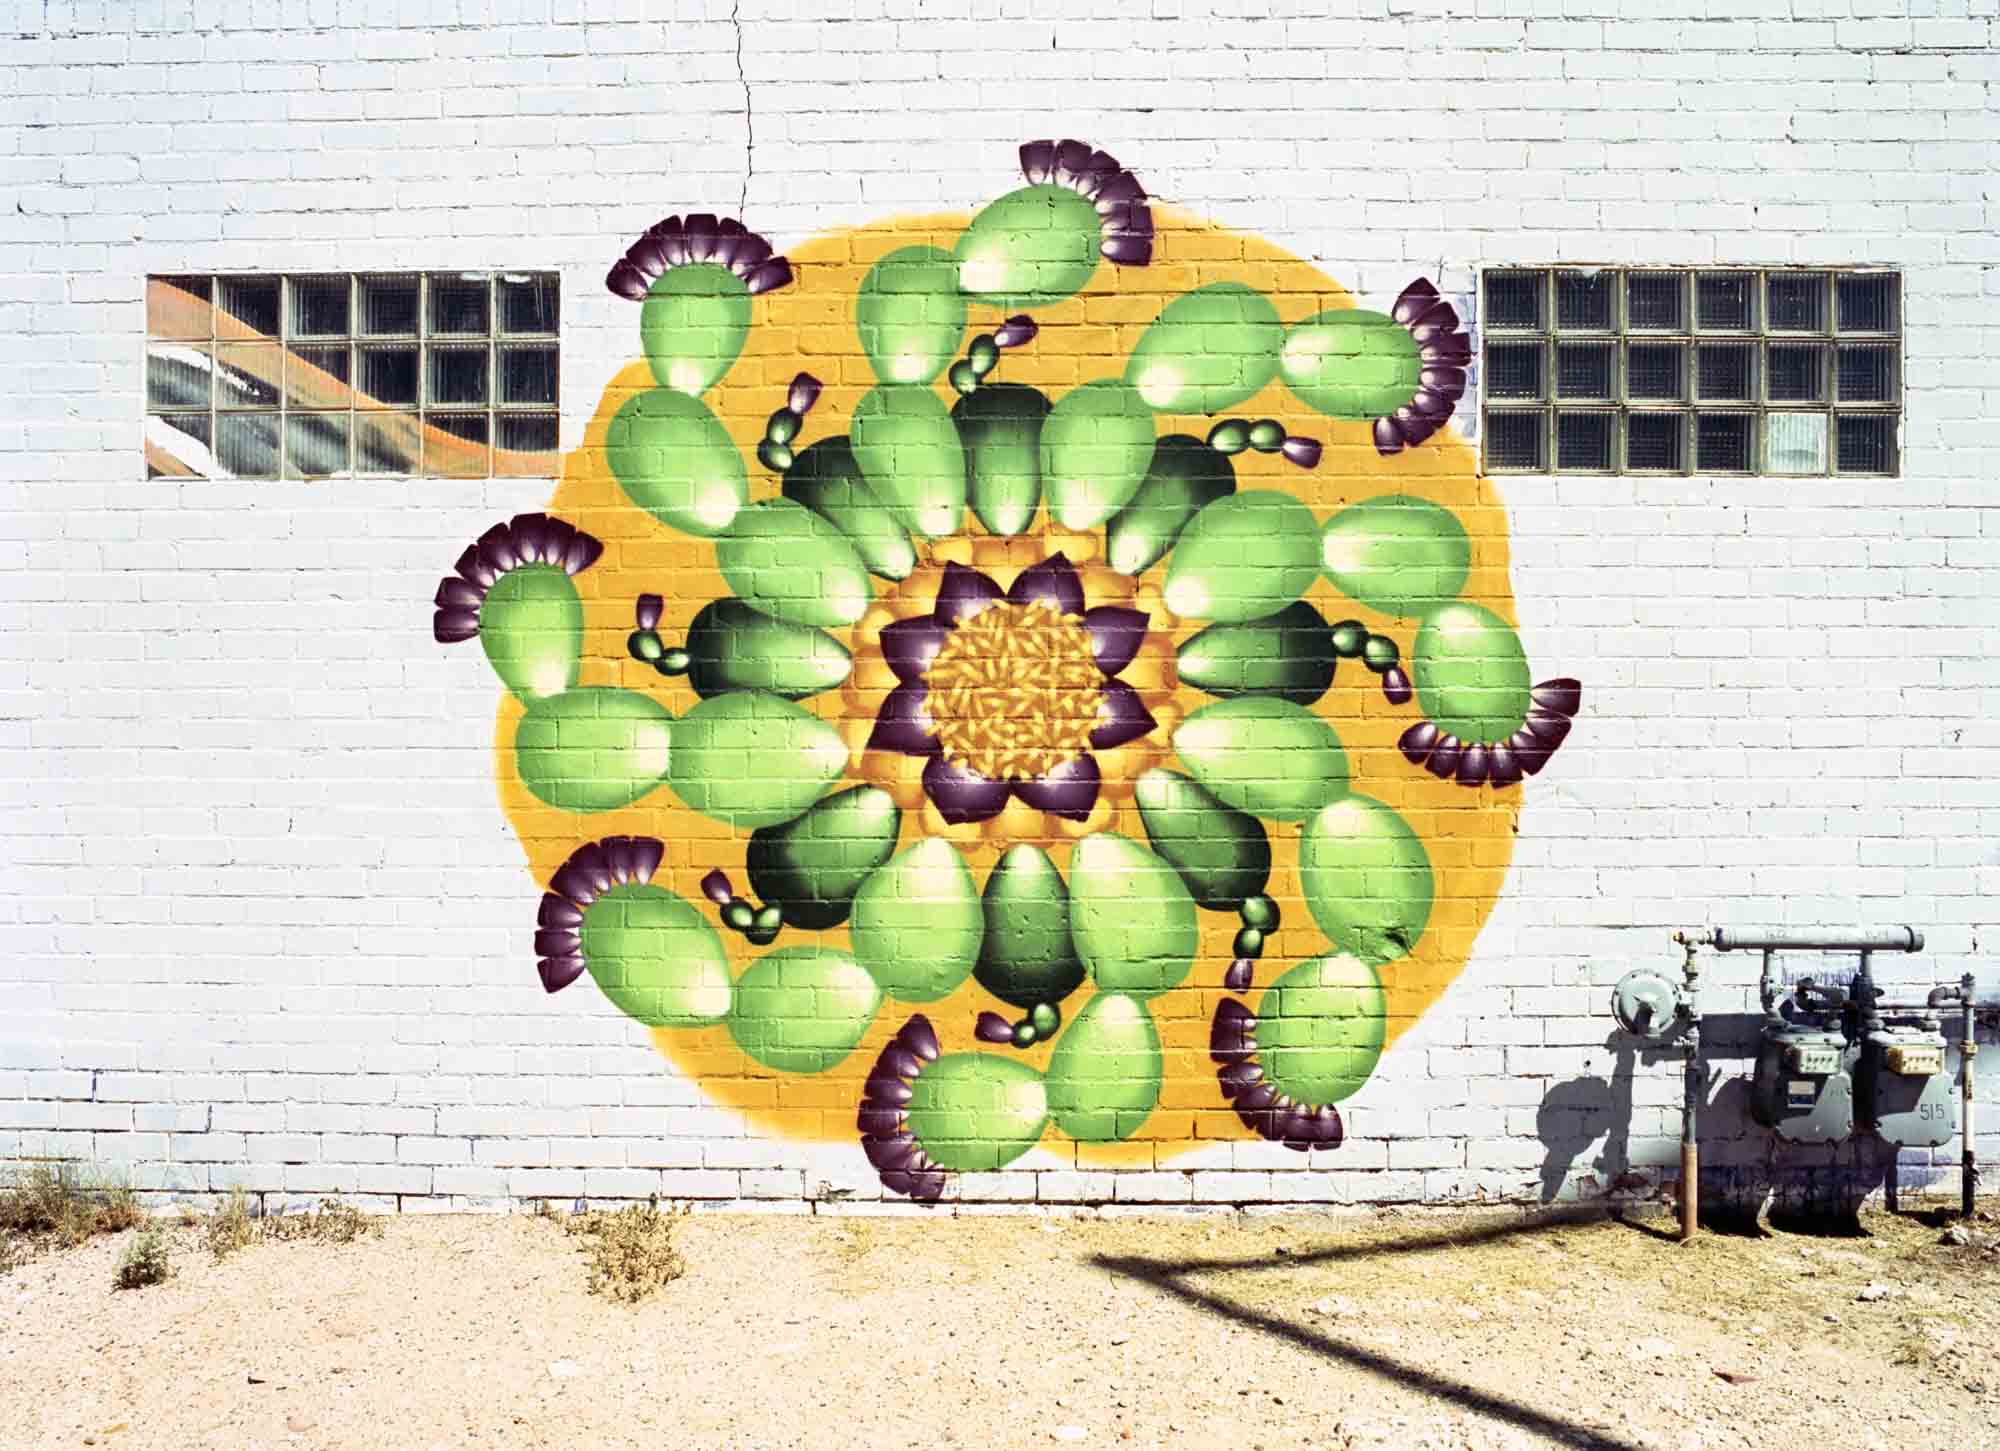 Cactus Mandala mural by Zina Rubiner - Mamiya-Sekor C 45mm 2.8 N, Kodak Portra 400